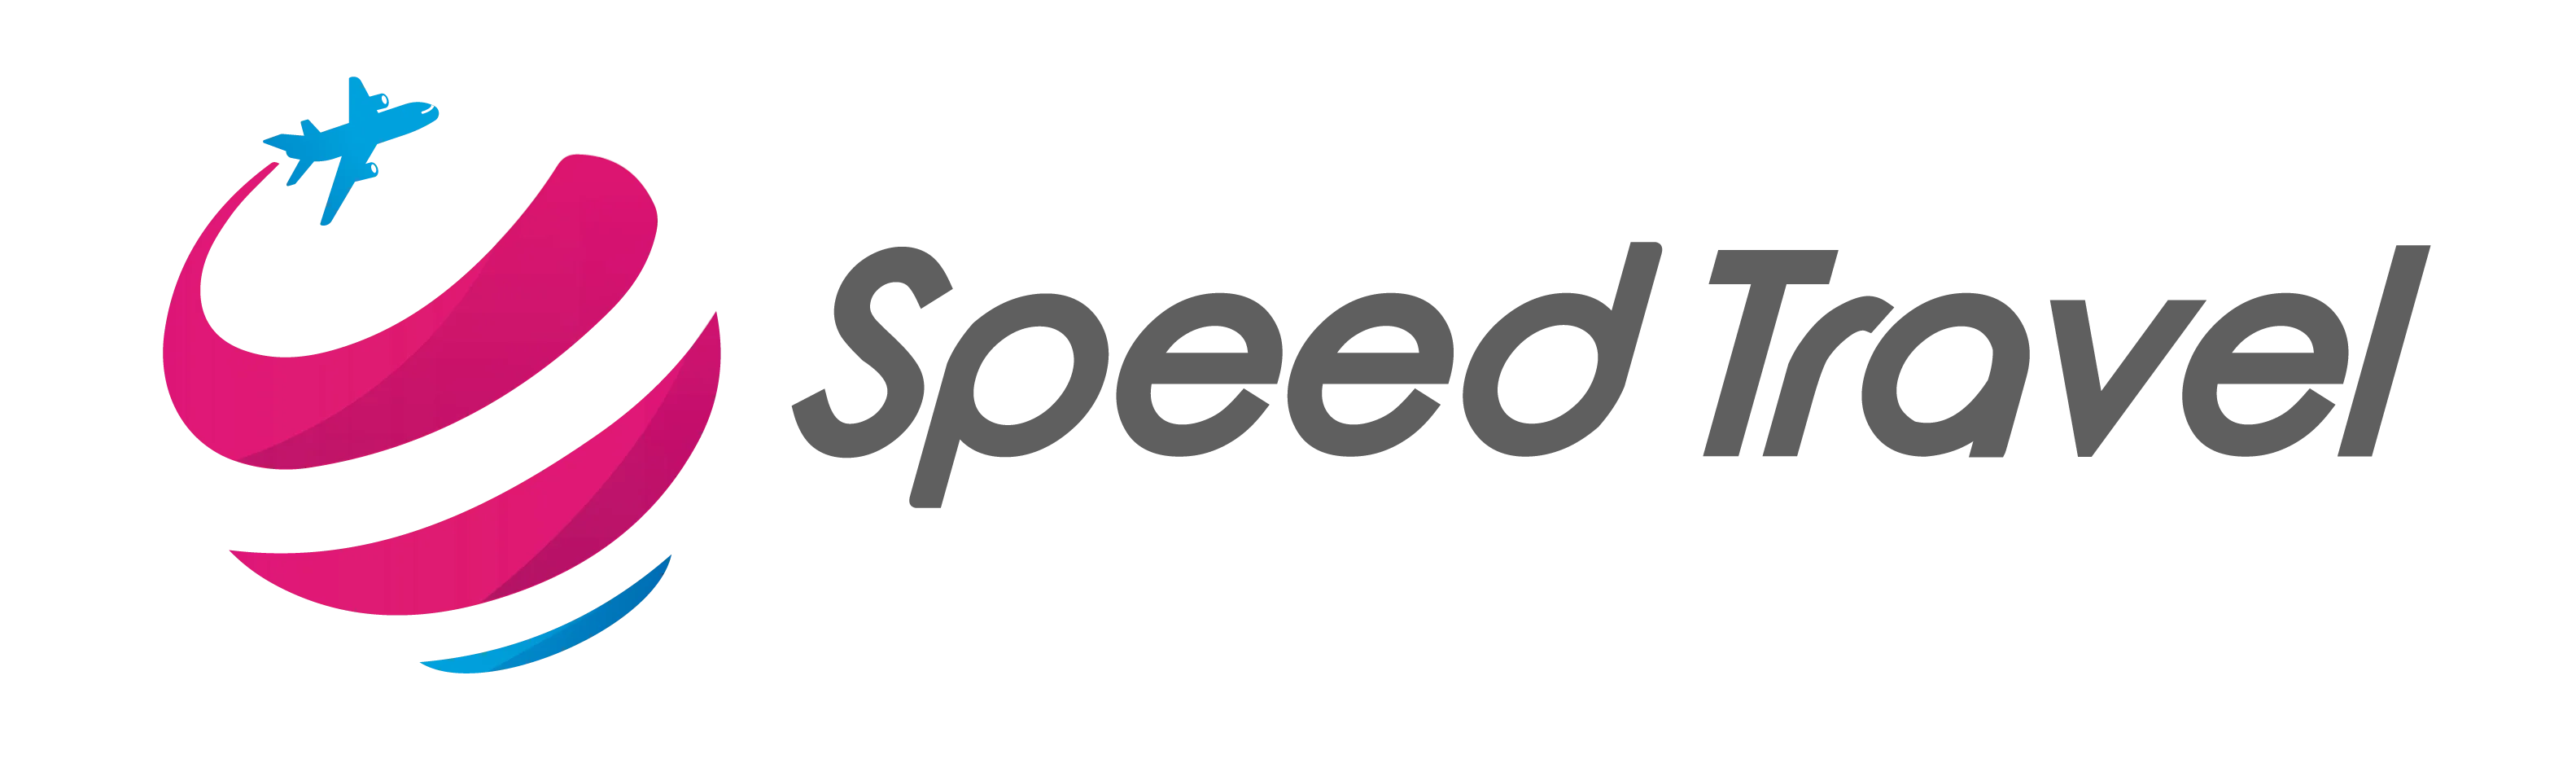 SpeedTravel